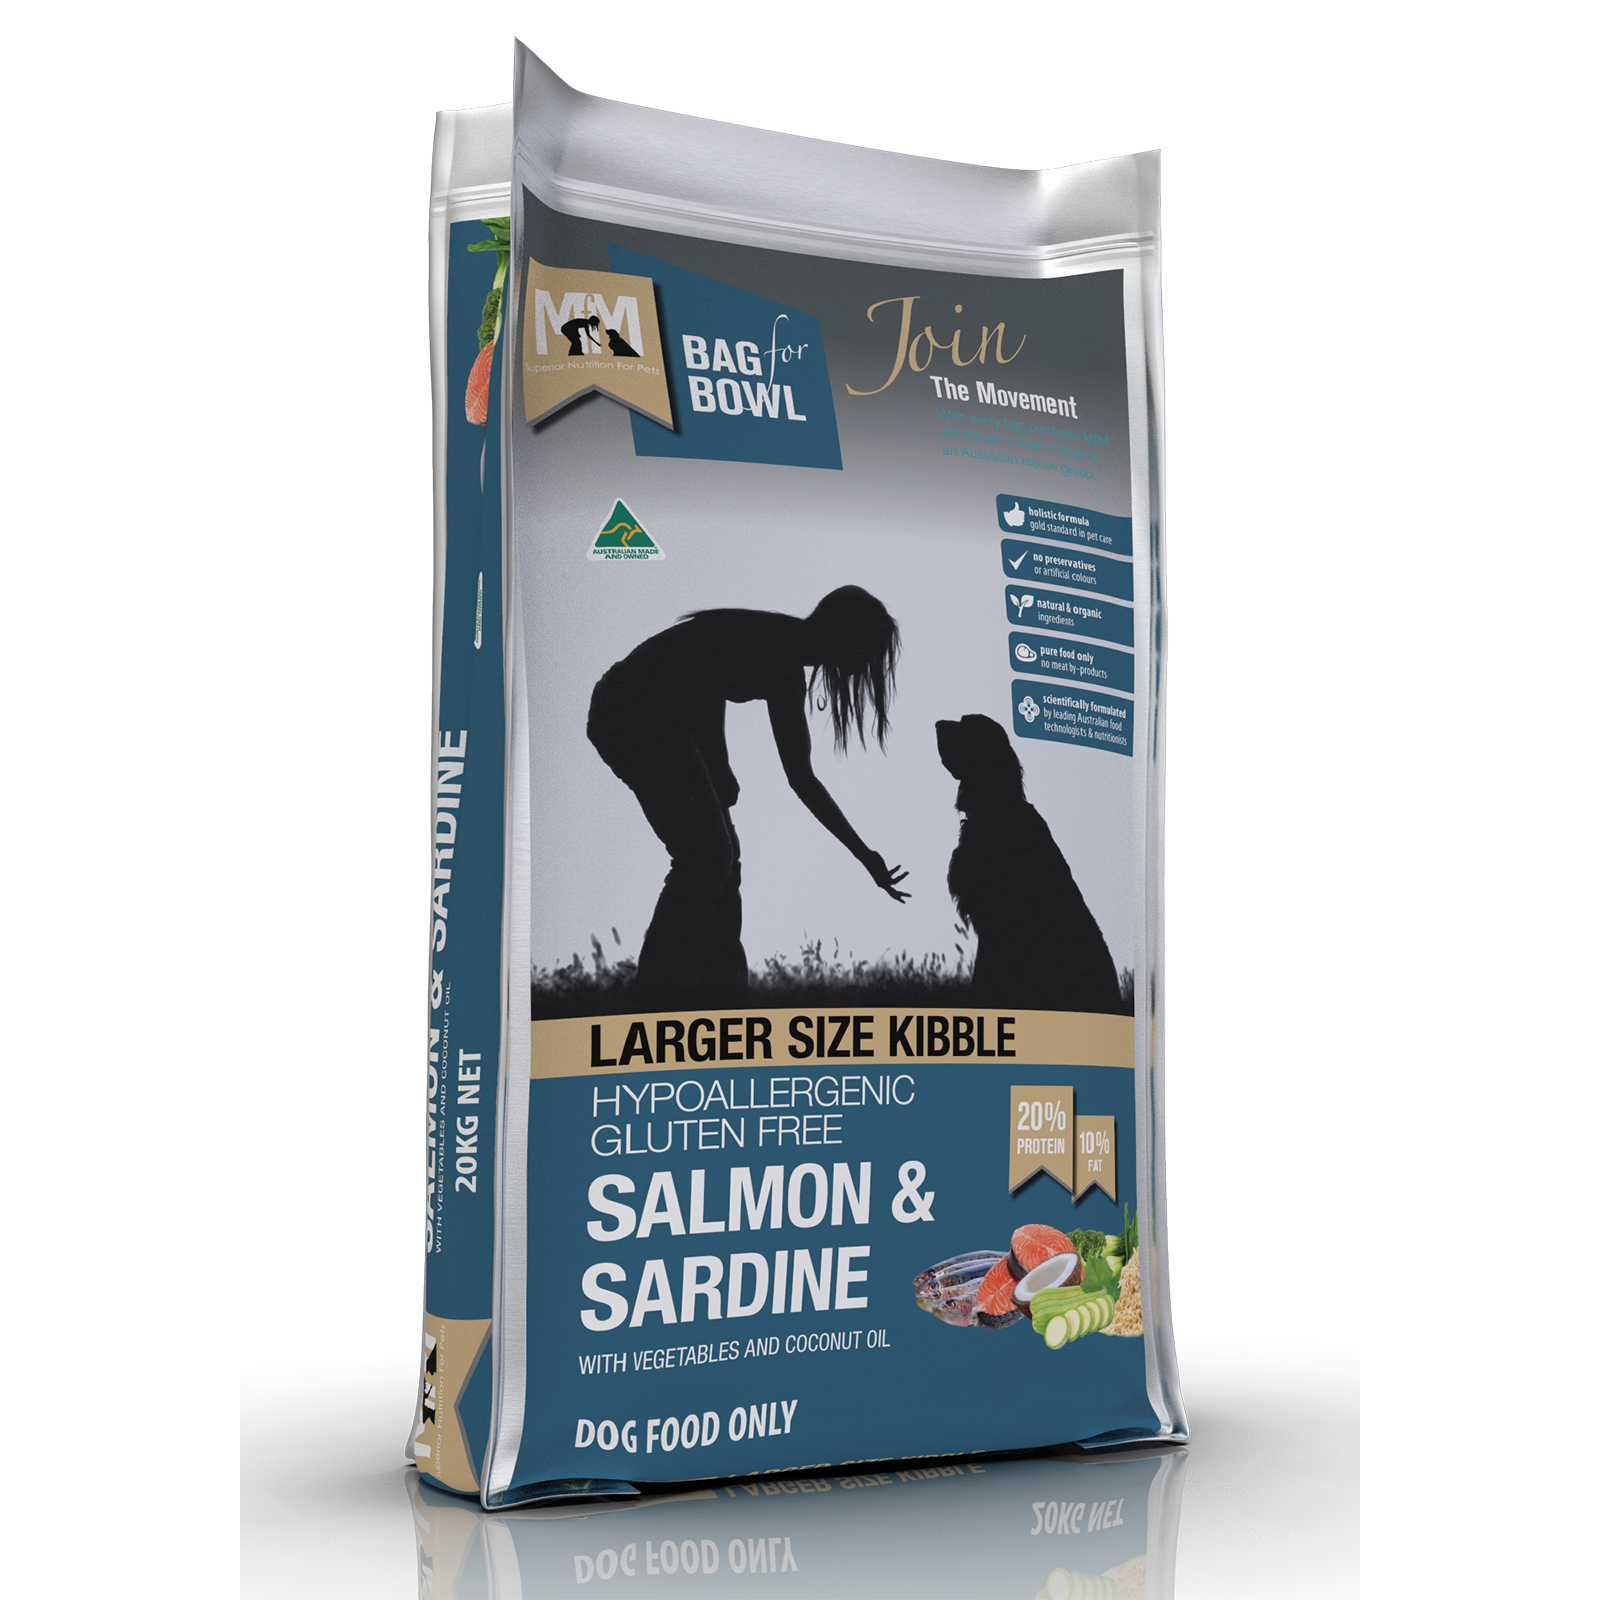 Meals For Mutts Dog Food Adult Large Kibble Salmon & Sardine